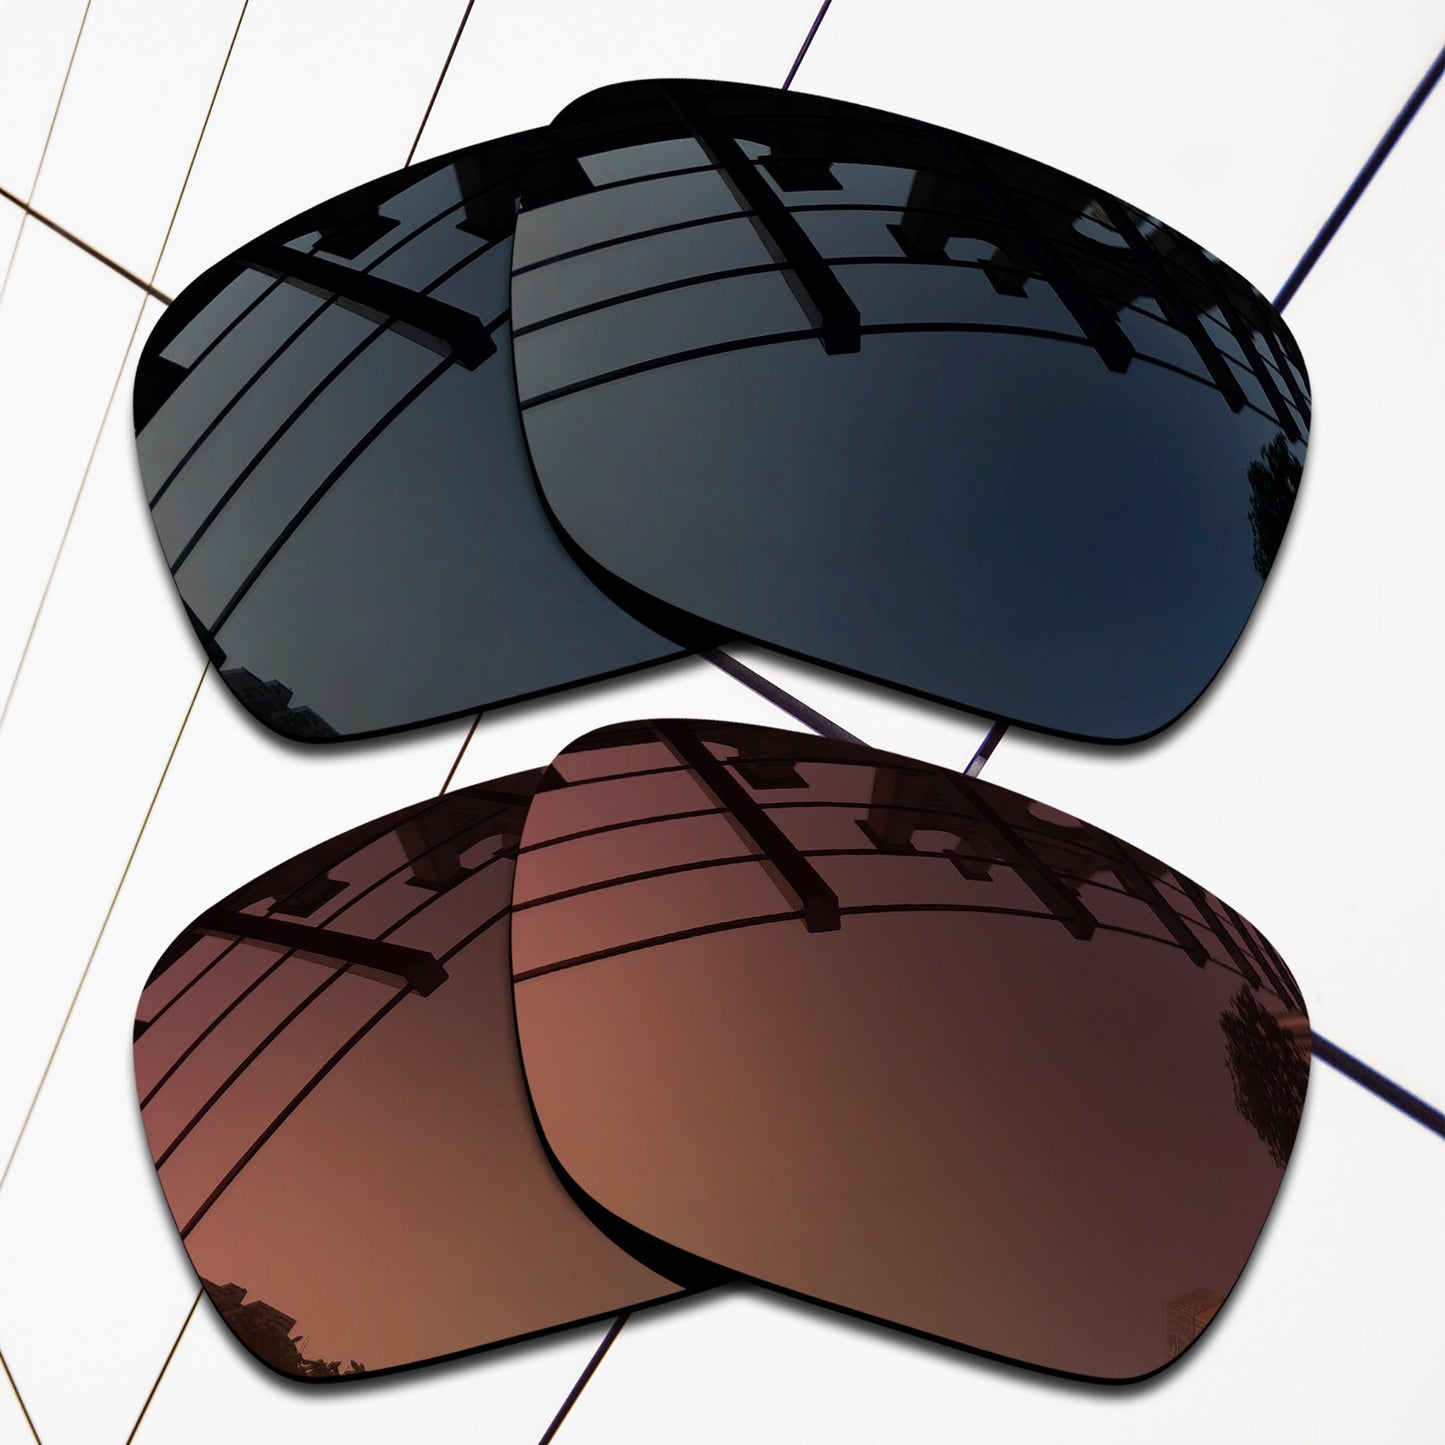 Polarized Replacement Lenses for Oakley Portal X Sunglasses